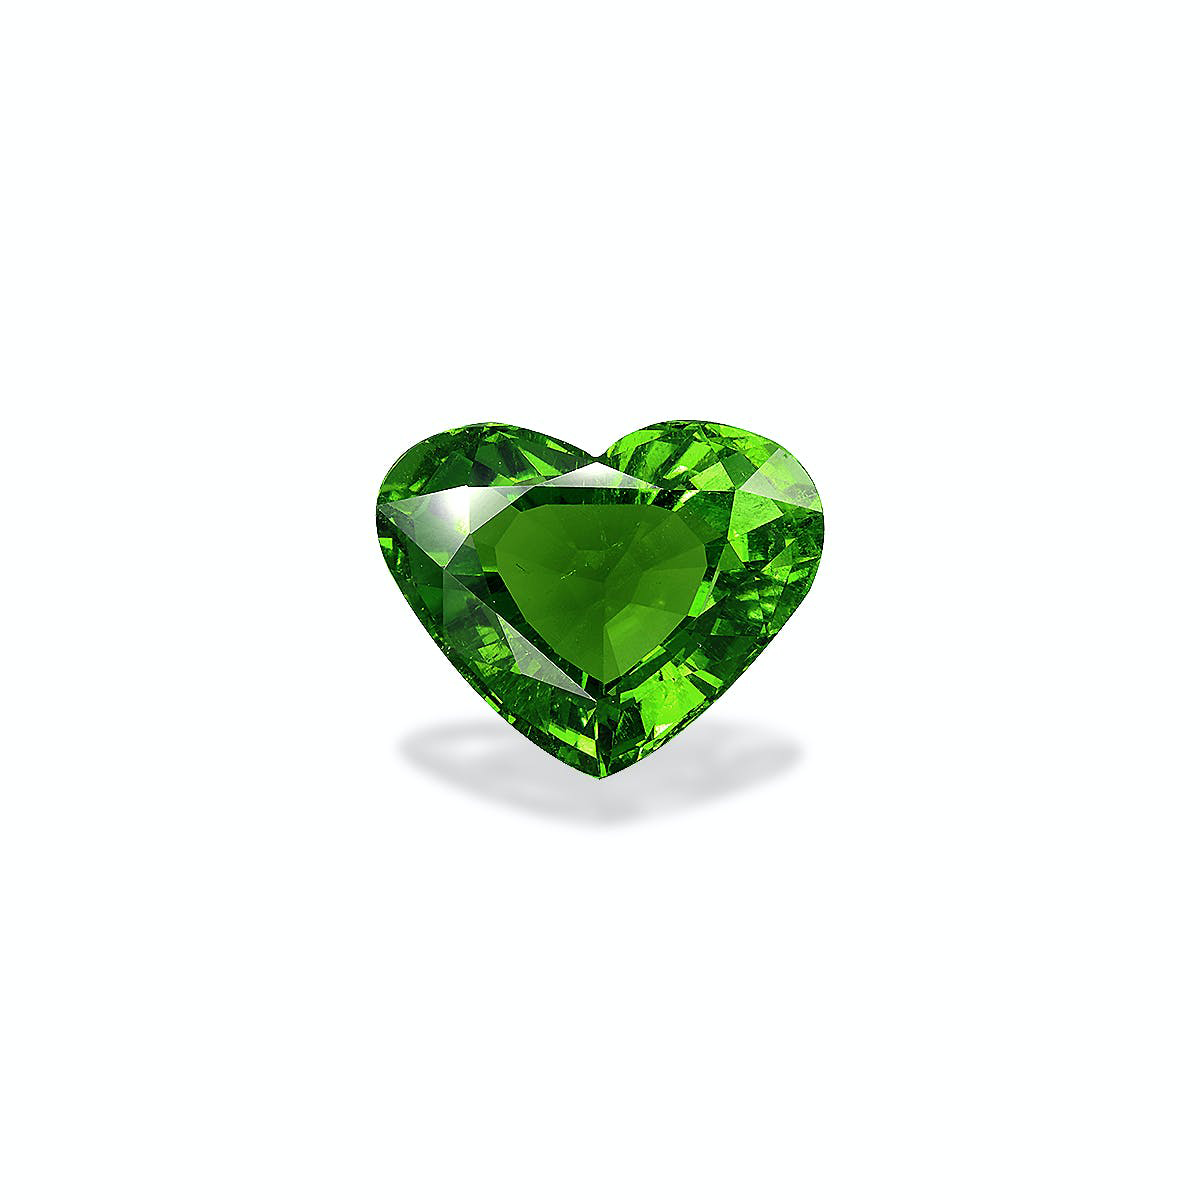 Picture of Green Paraiba Tourmaline 33.05ct (PA0146)